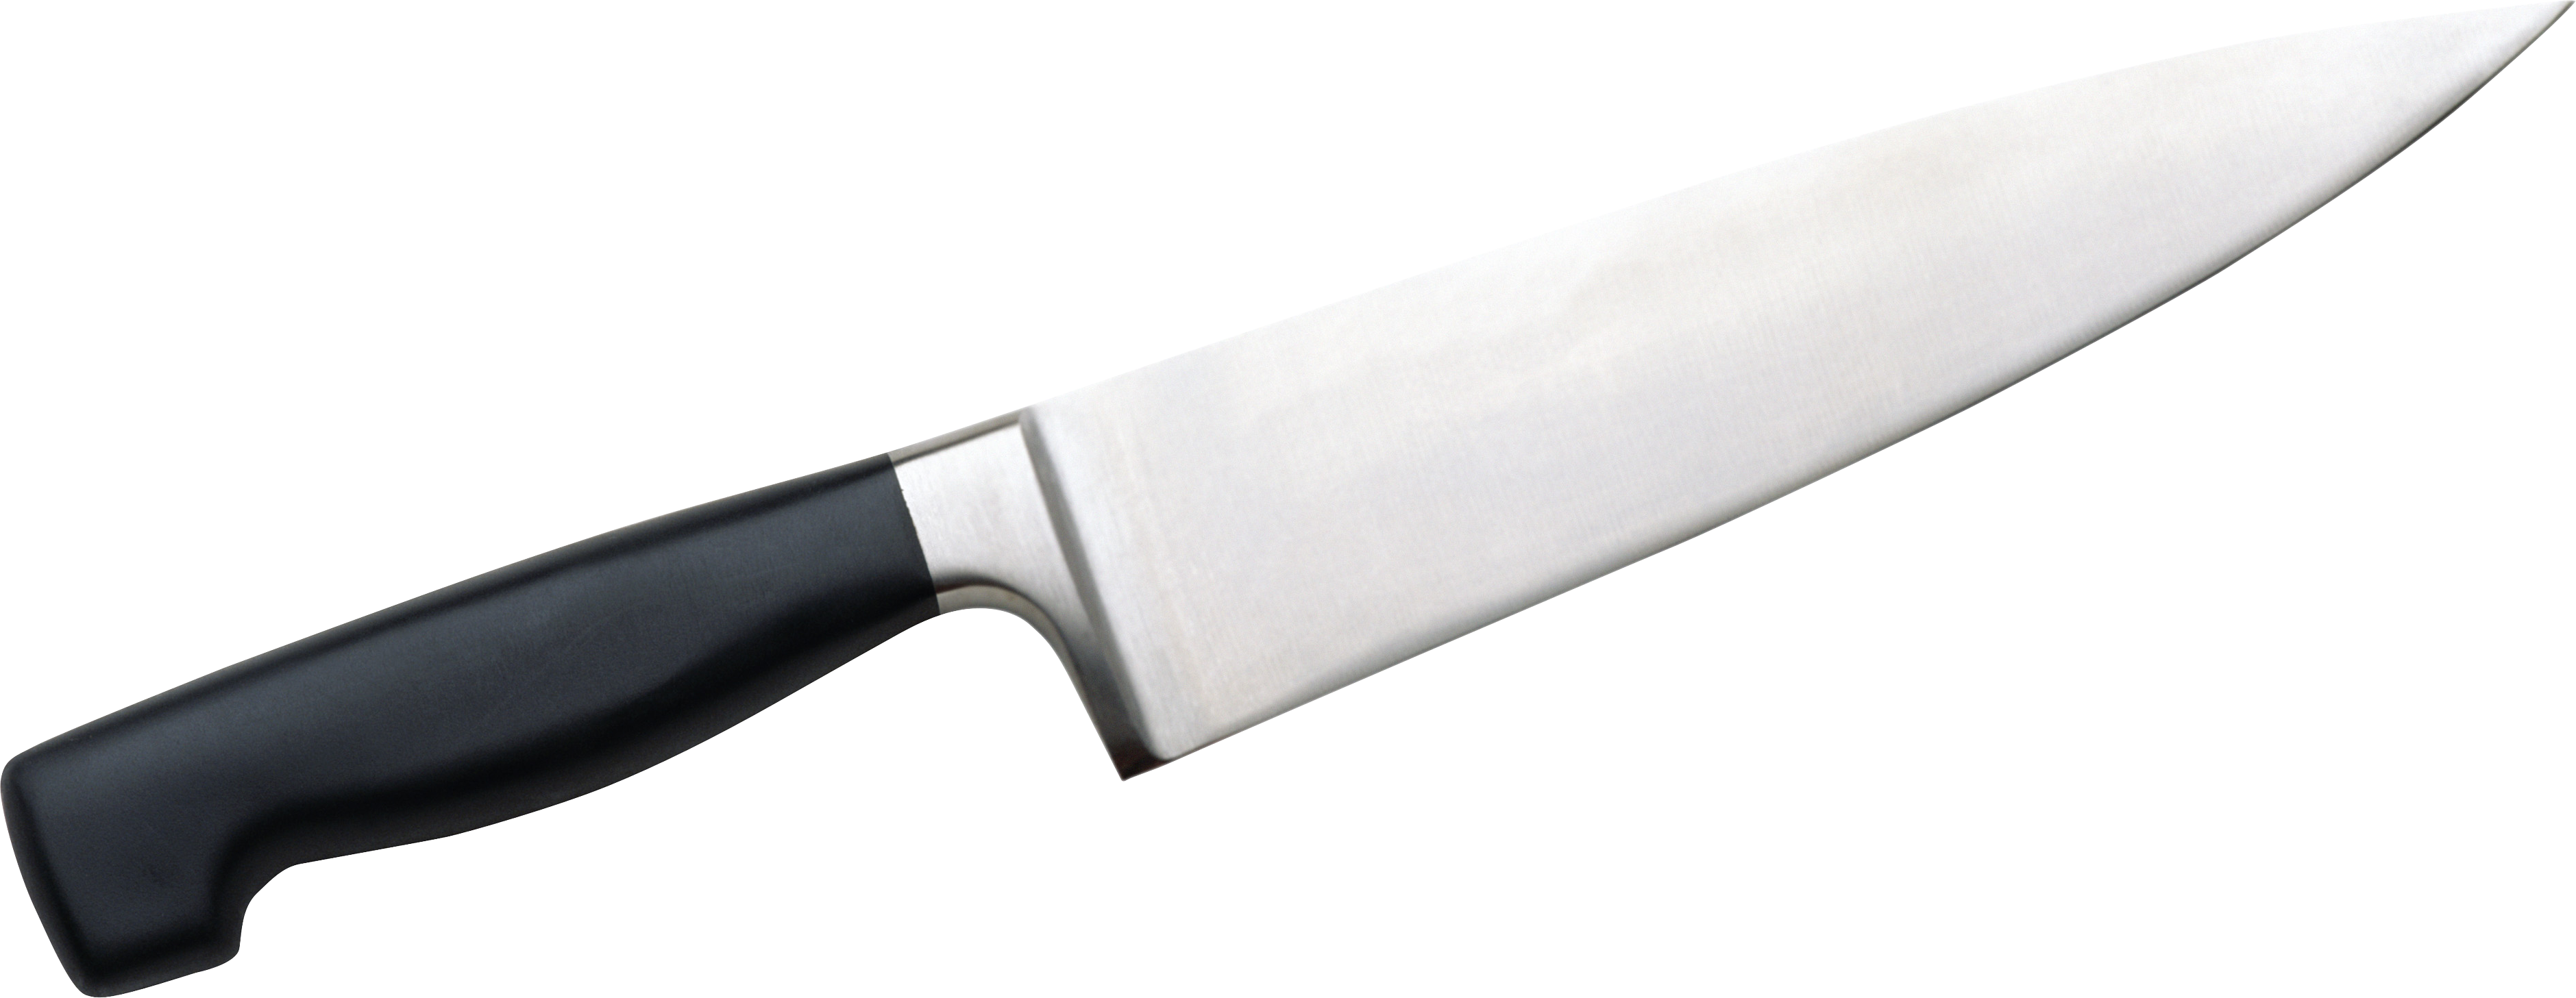 Kitchen Knife Png 7 